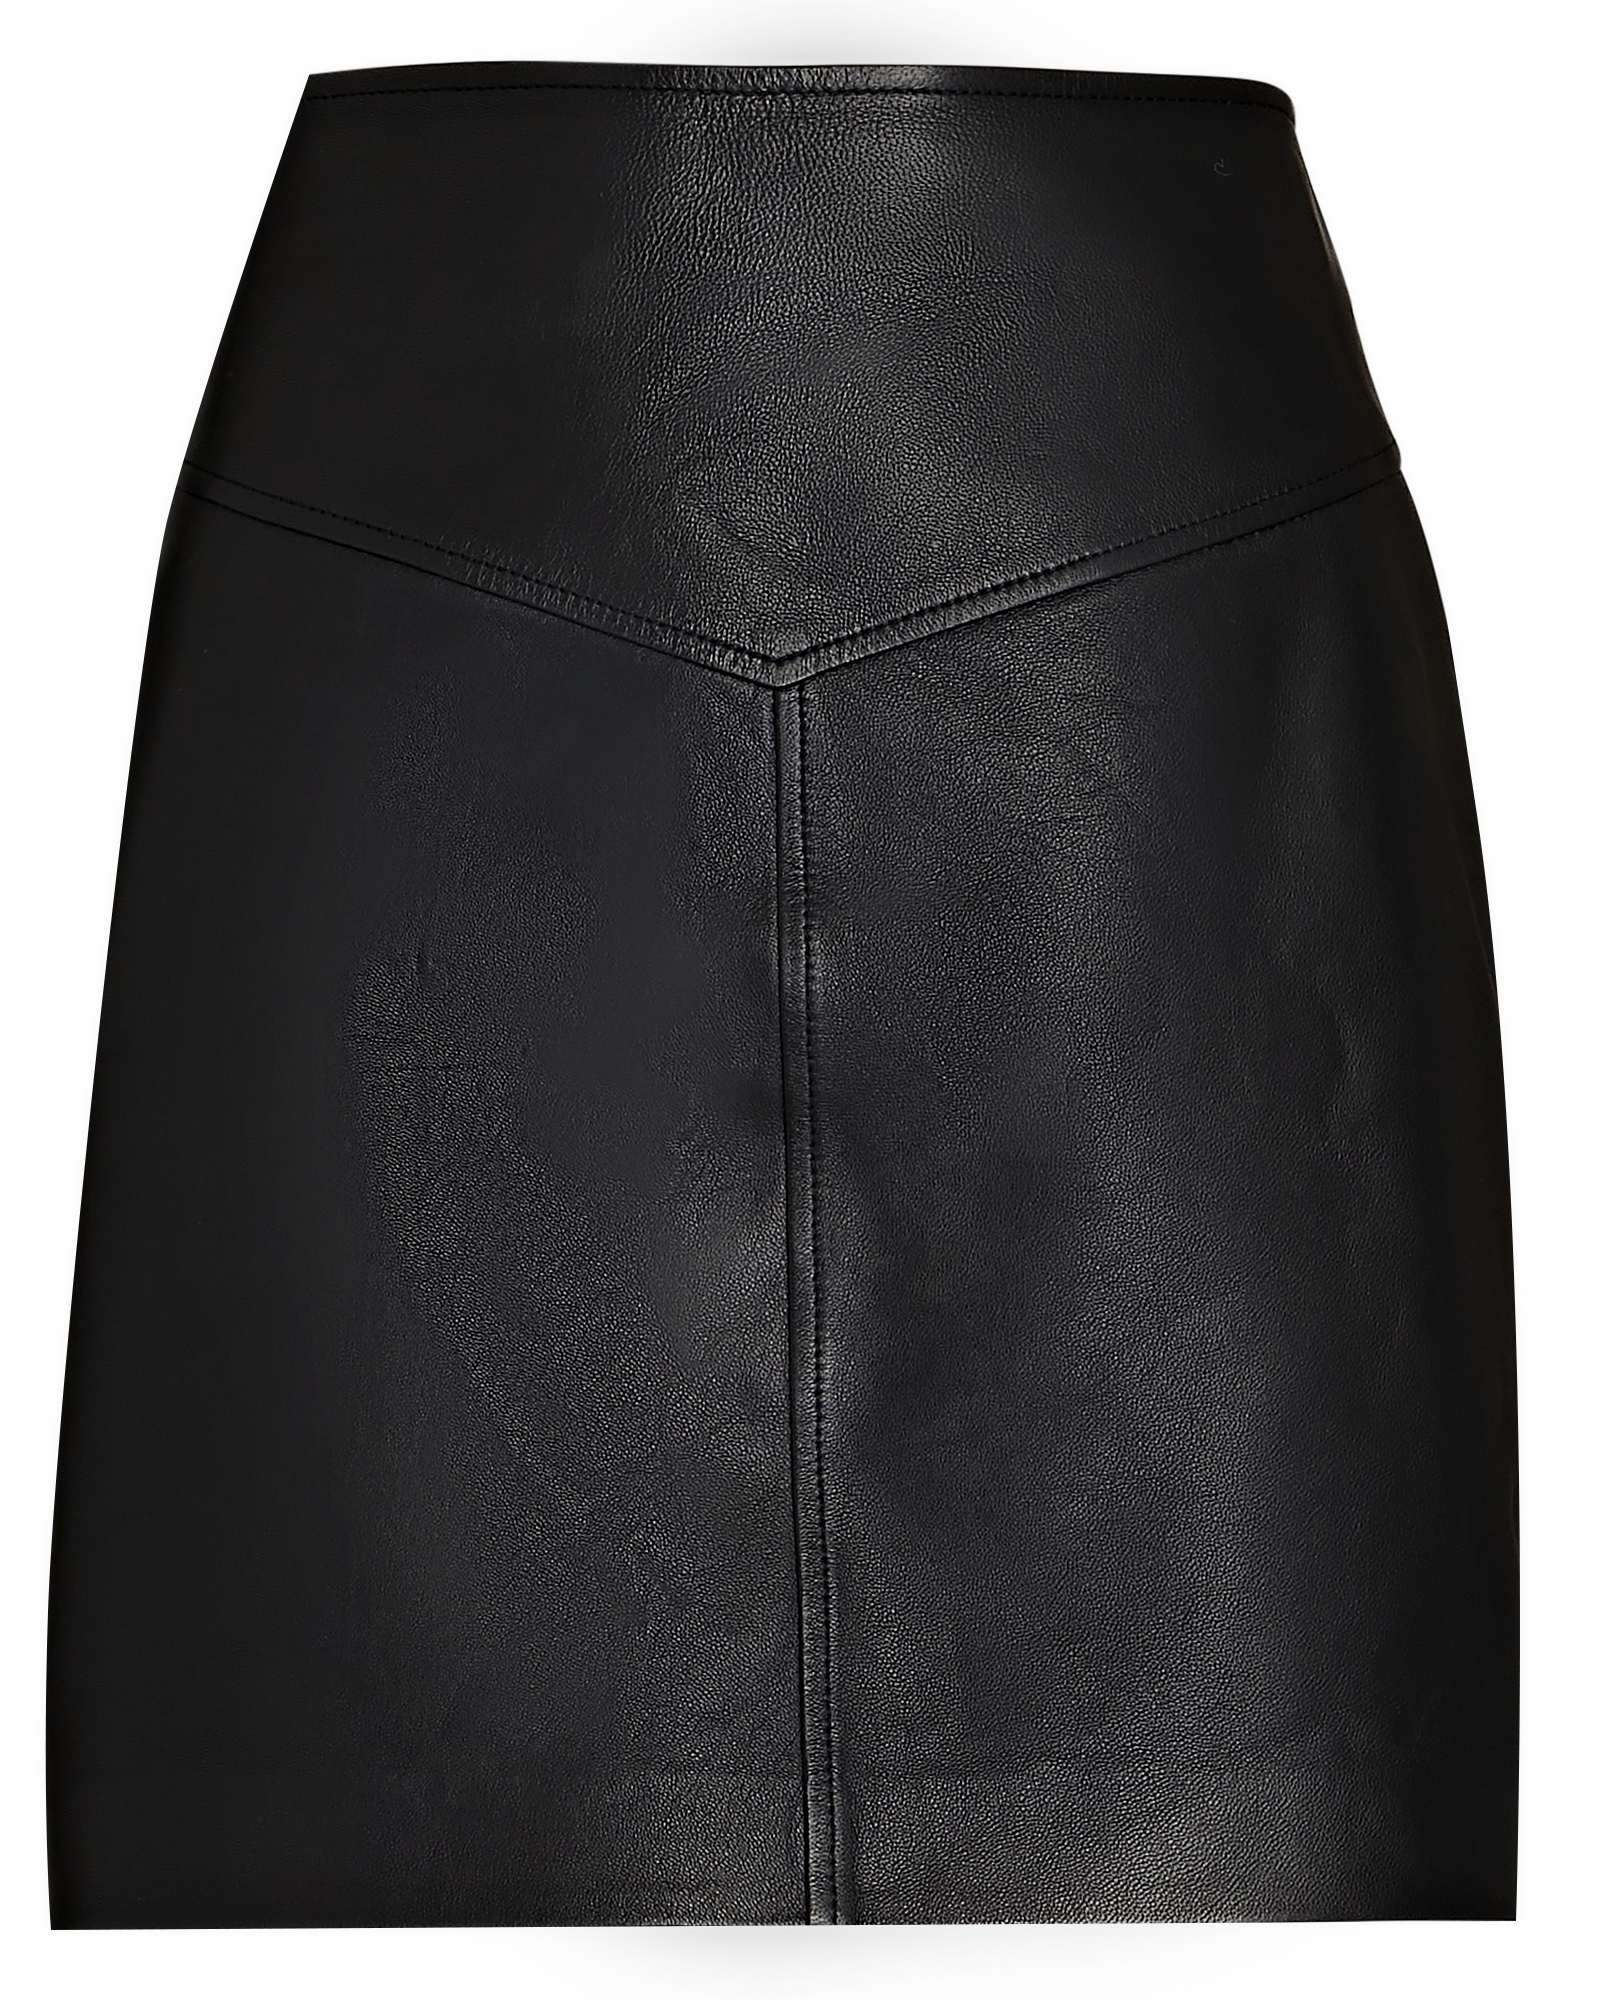 INTERMIX Private Label Blanche Leather Mini Skirt | INTERMIX®